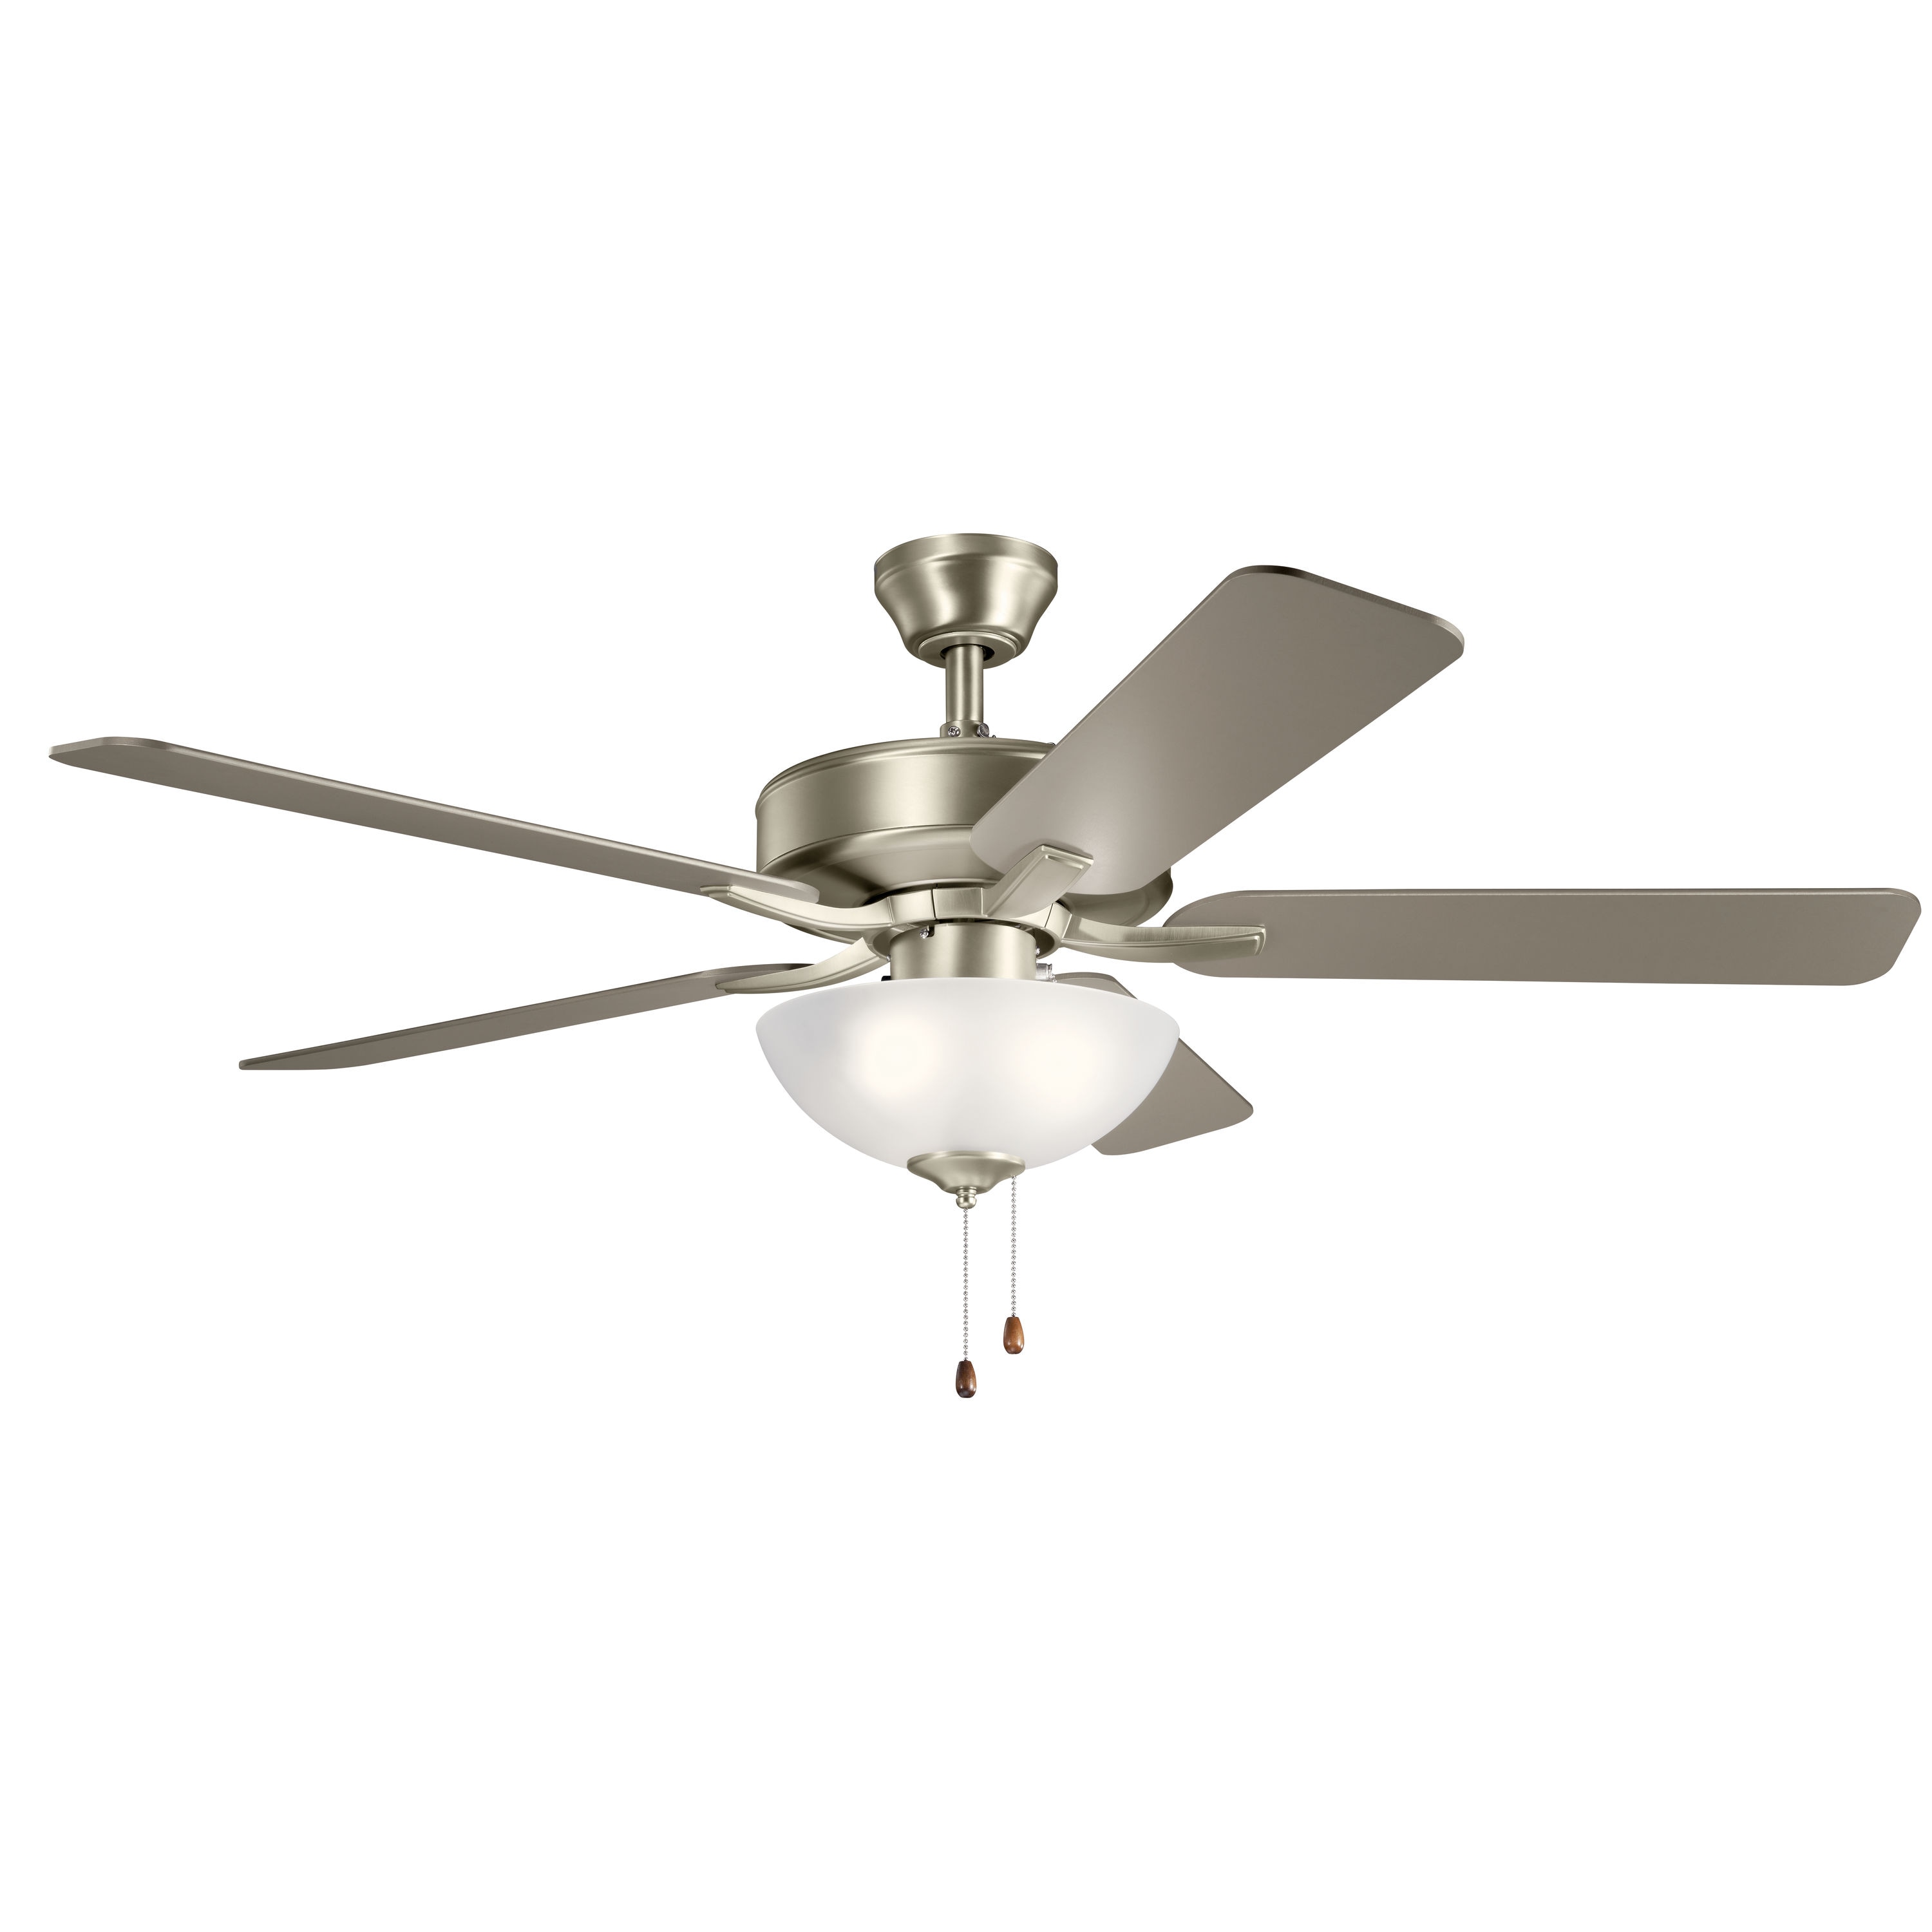 Kichler Basics Pro Select 52-in Brushed Nickel Indoor Ceiling Fan